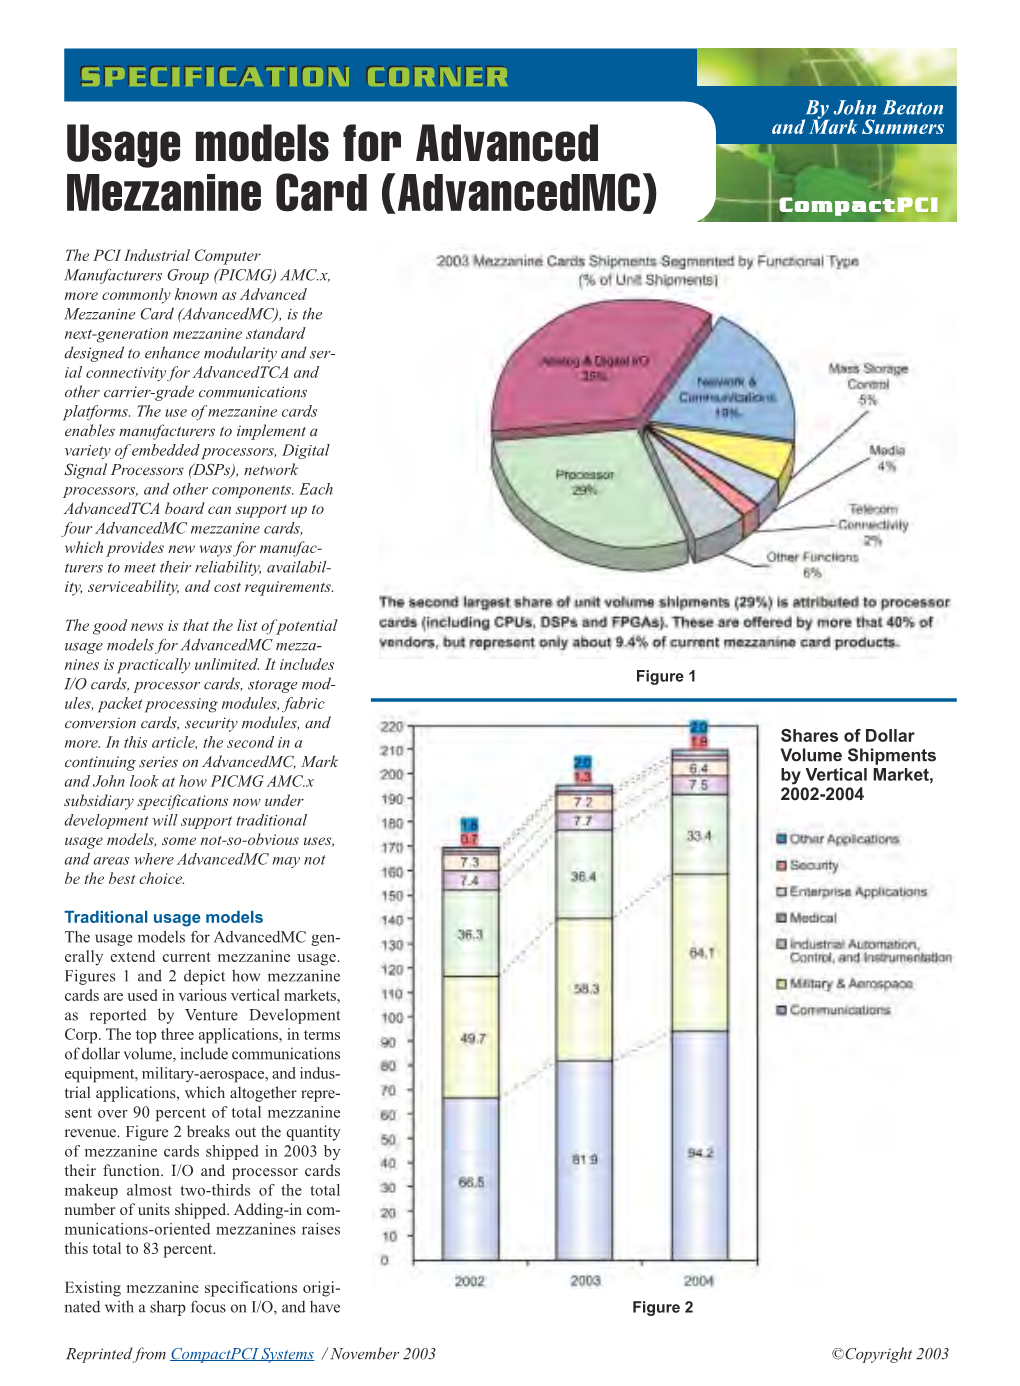 Usage Models for Advanced Mezzanine Card (Advancedmc)